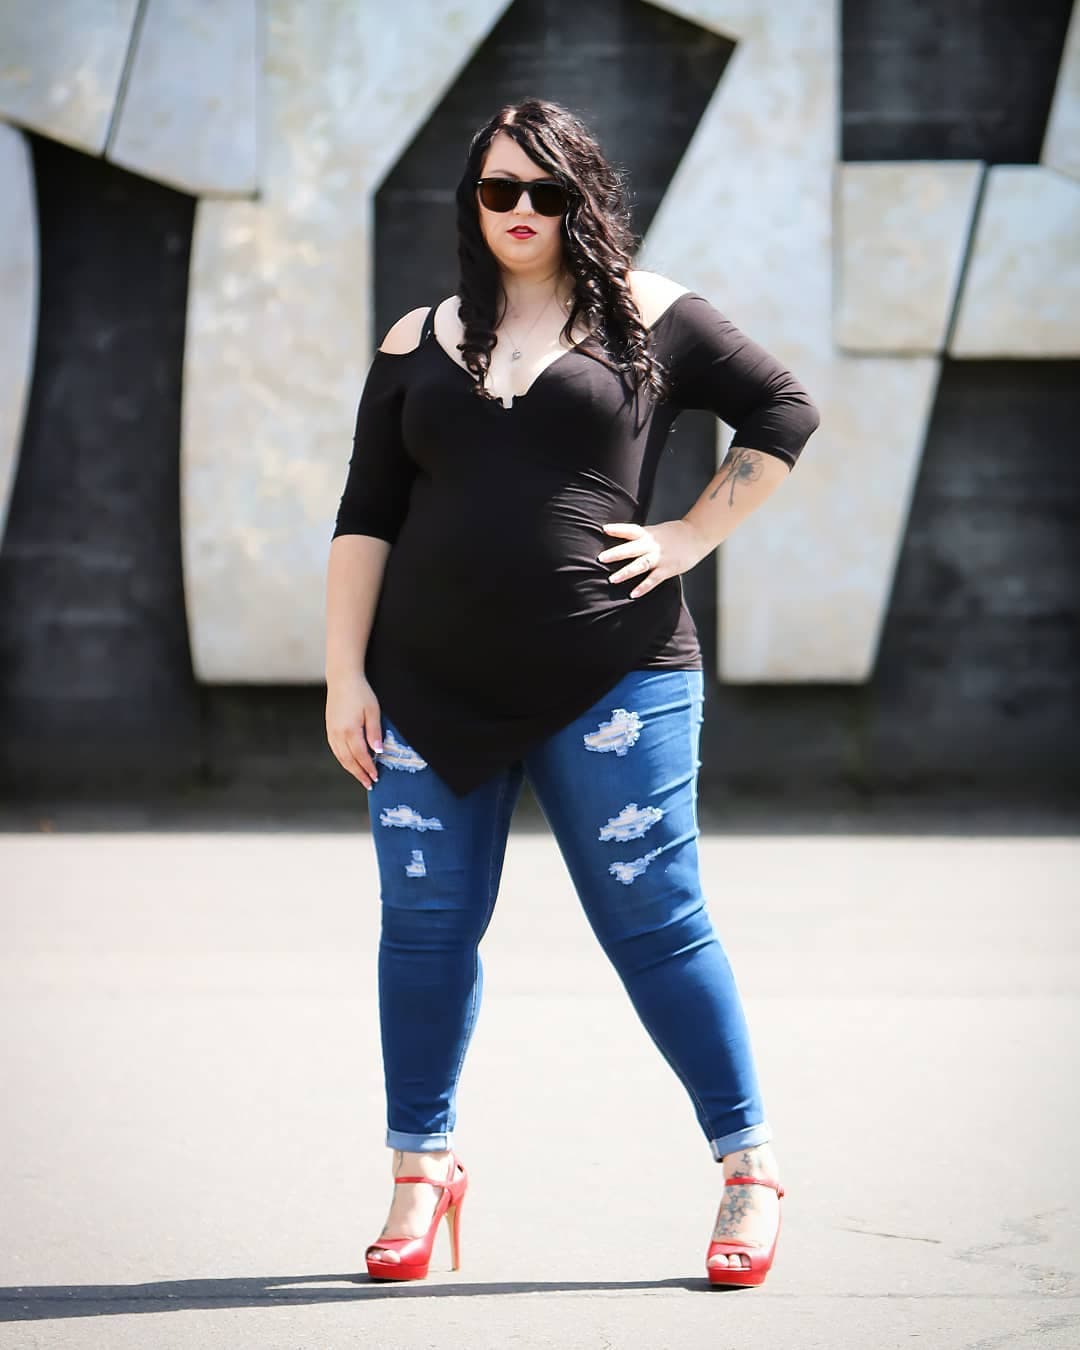 Sahara Marie - Height and Weight, Bio, Wiki, Age, Instagram, Photo ...